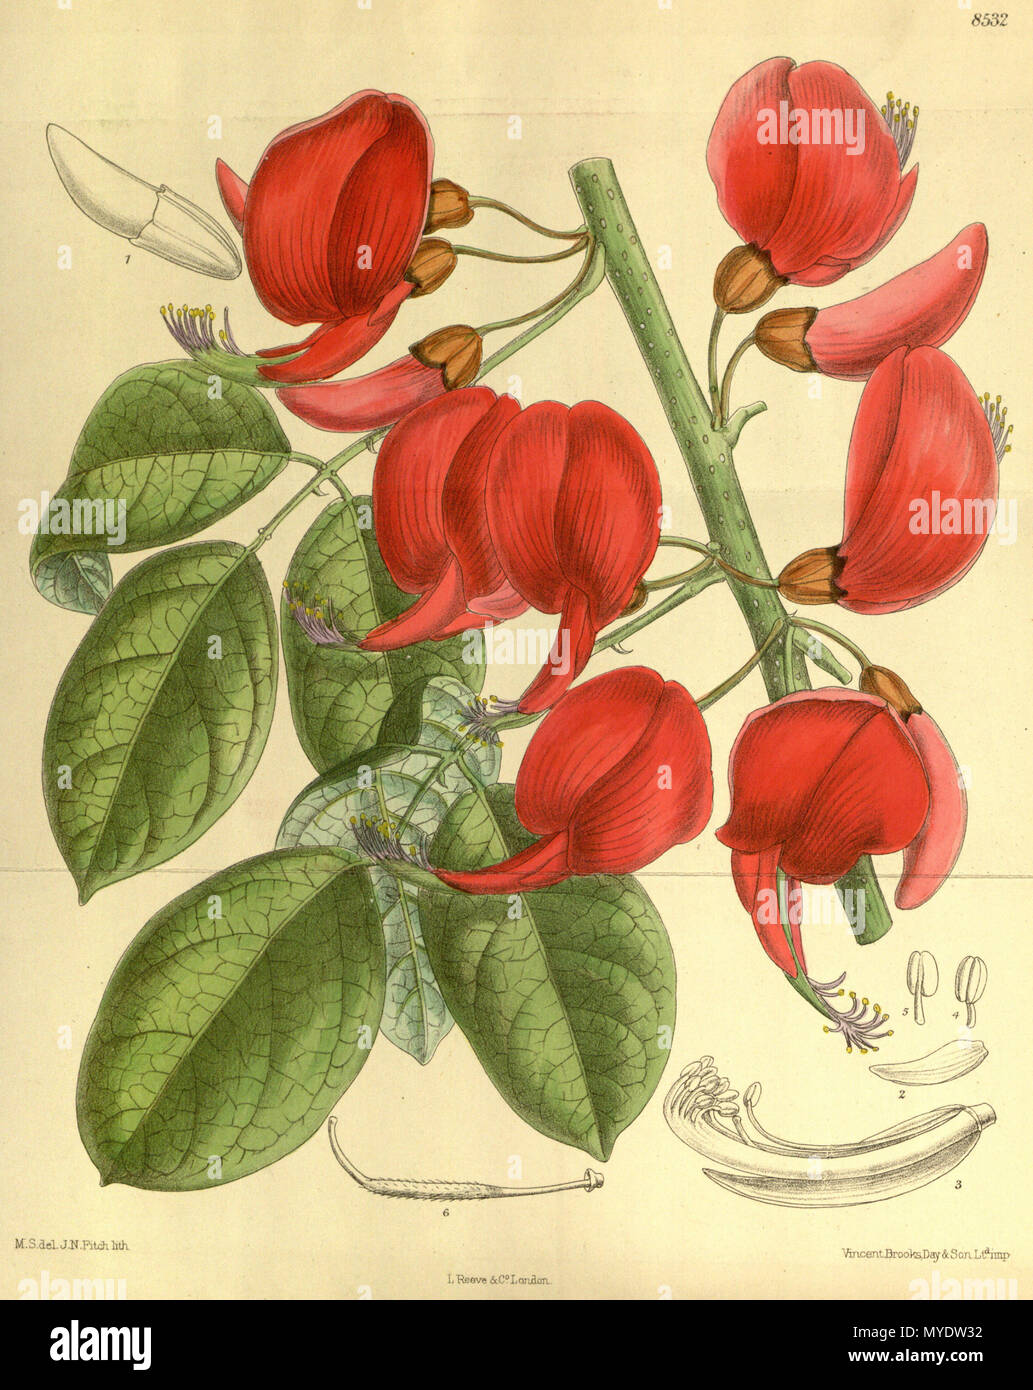 . Erythrina pulcherrima (= Erythrina crista-galli), Fabaceae . 1914. M.S. del., J.N.Fitch lith. 167 Erythrina pulcherrima 140-8532 Stock Photo